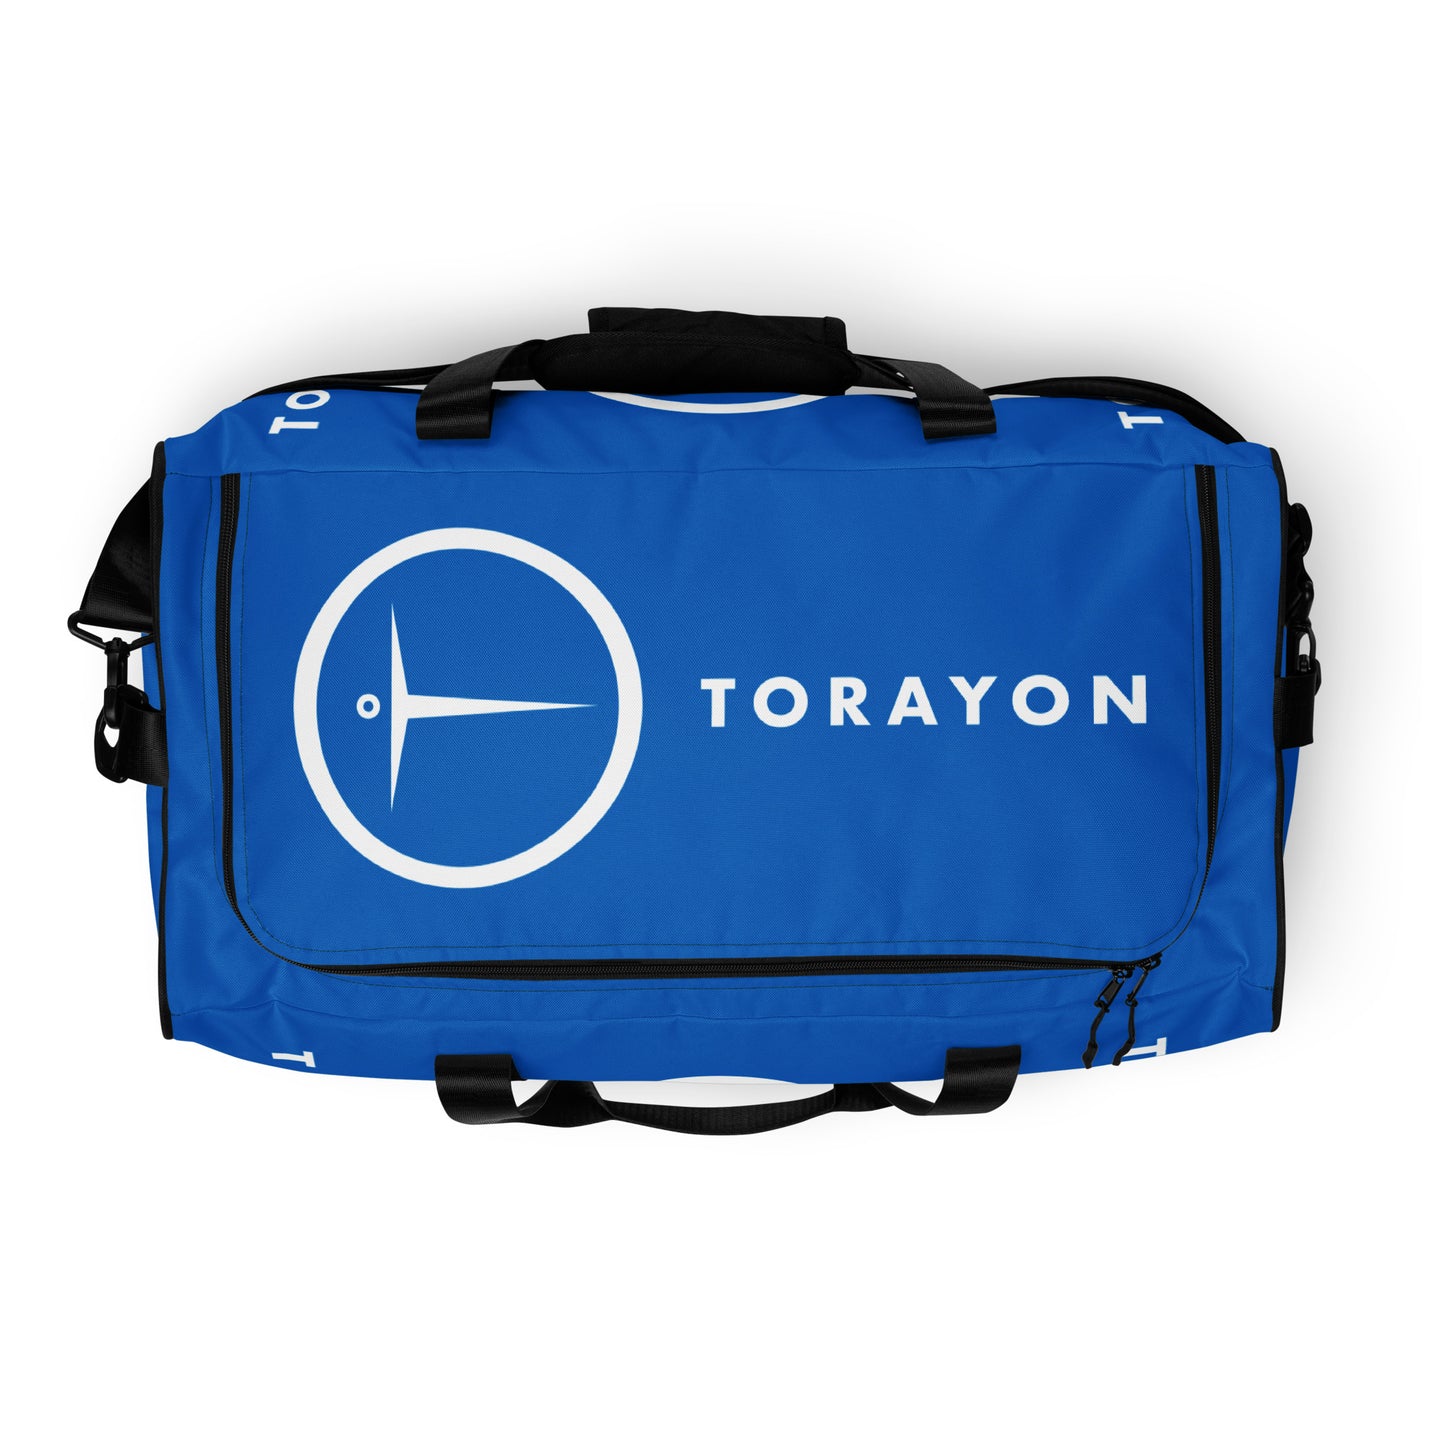 TORAYON Blue Duffle bag